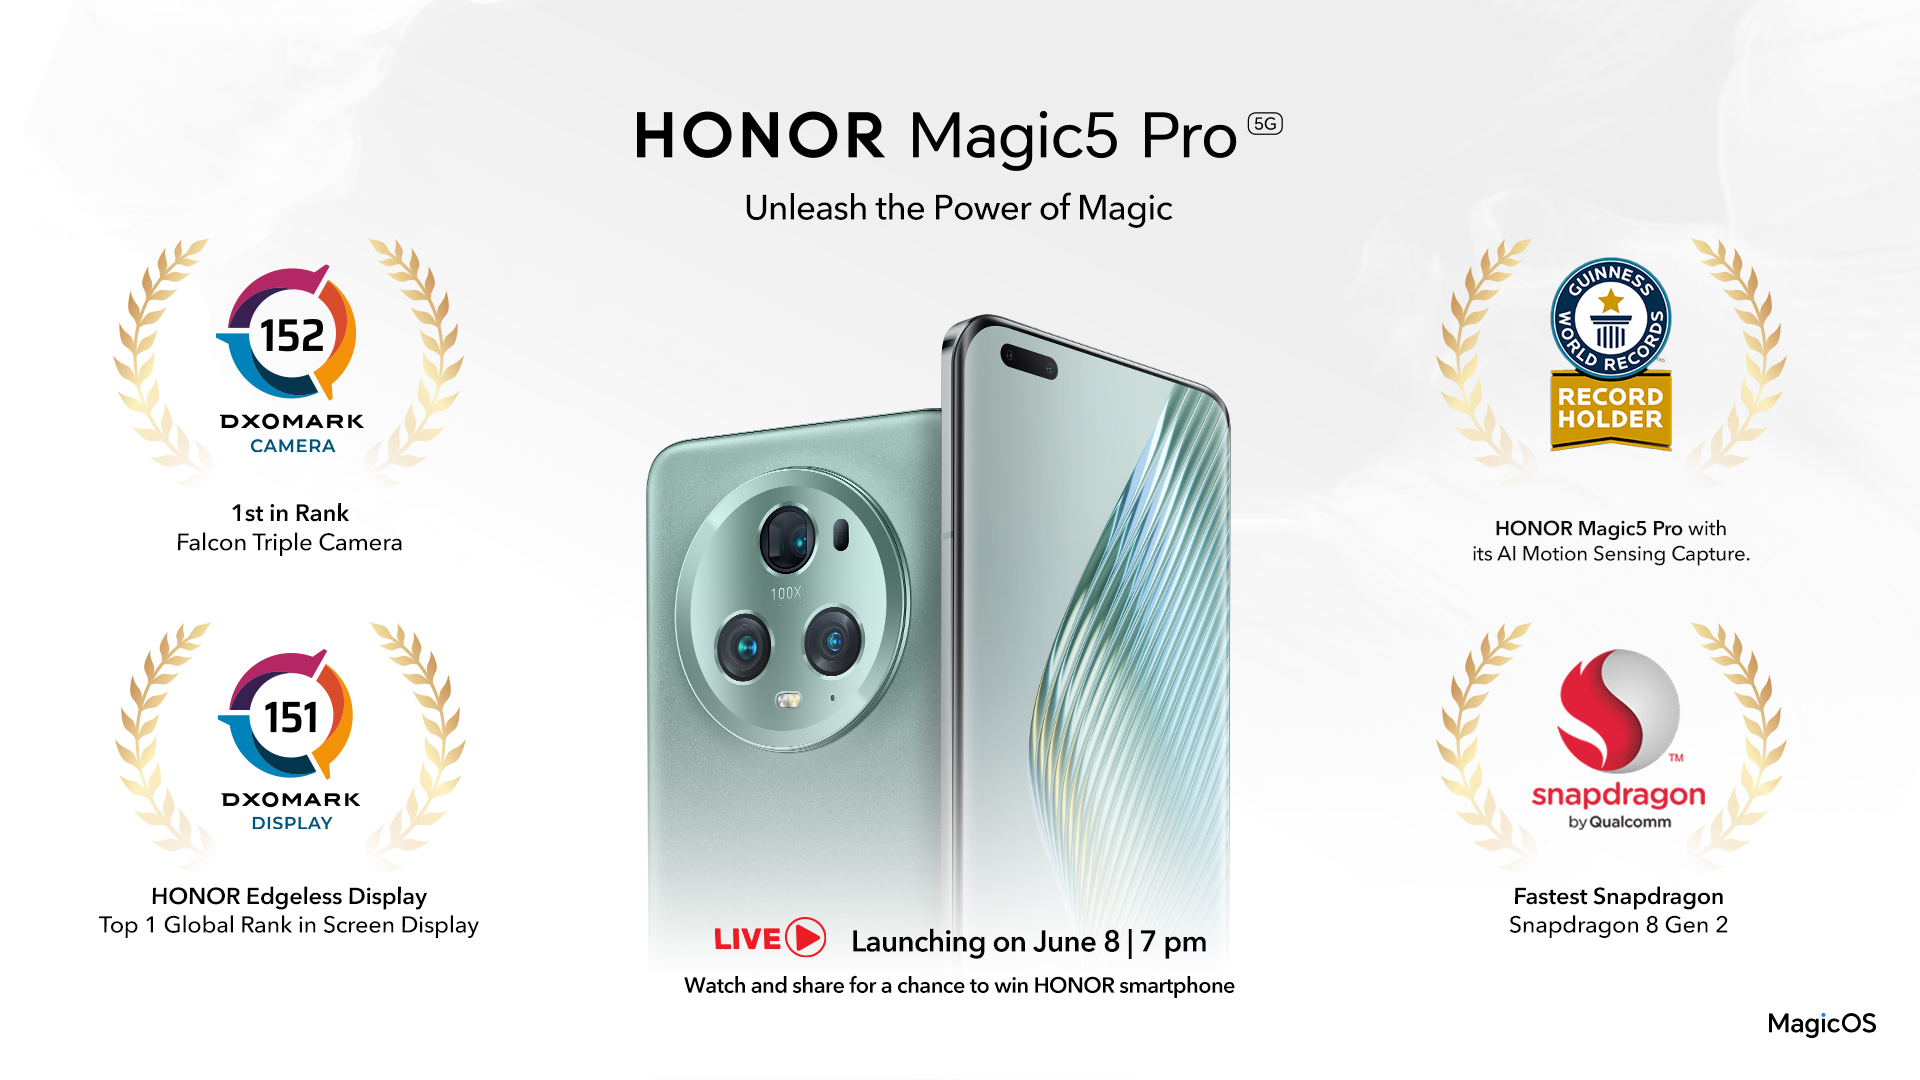 Main KV - Launch of HONOR Magic5 Pro on June 8